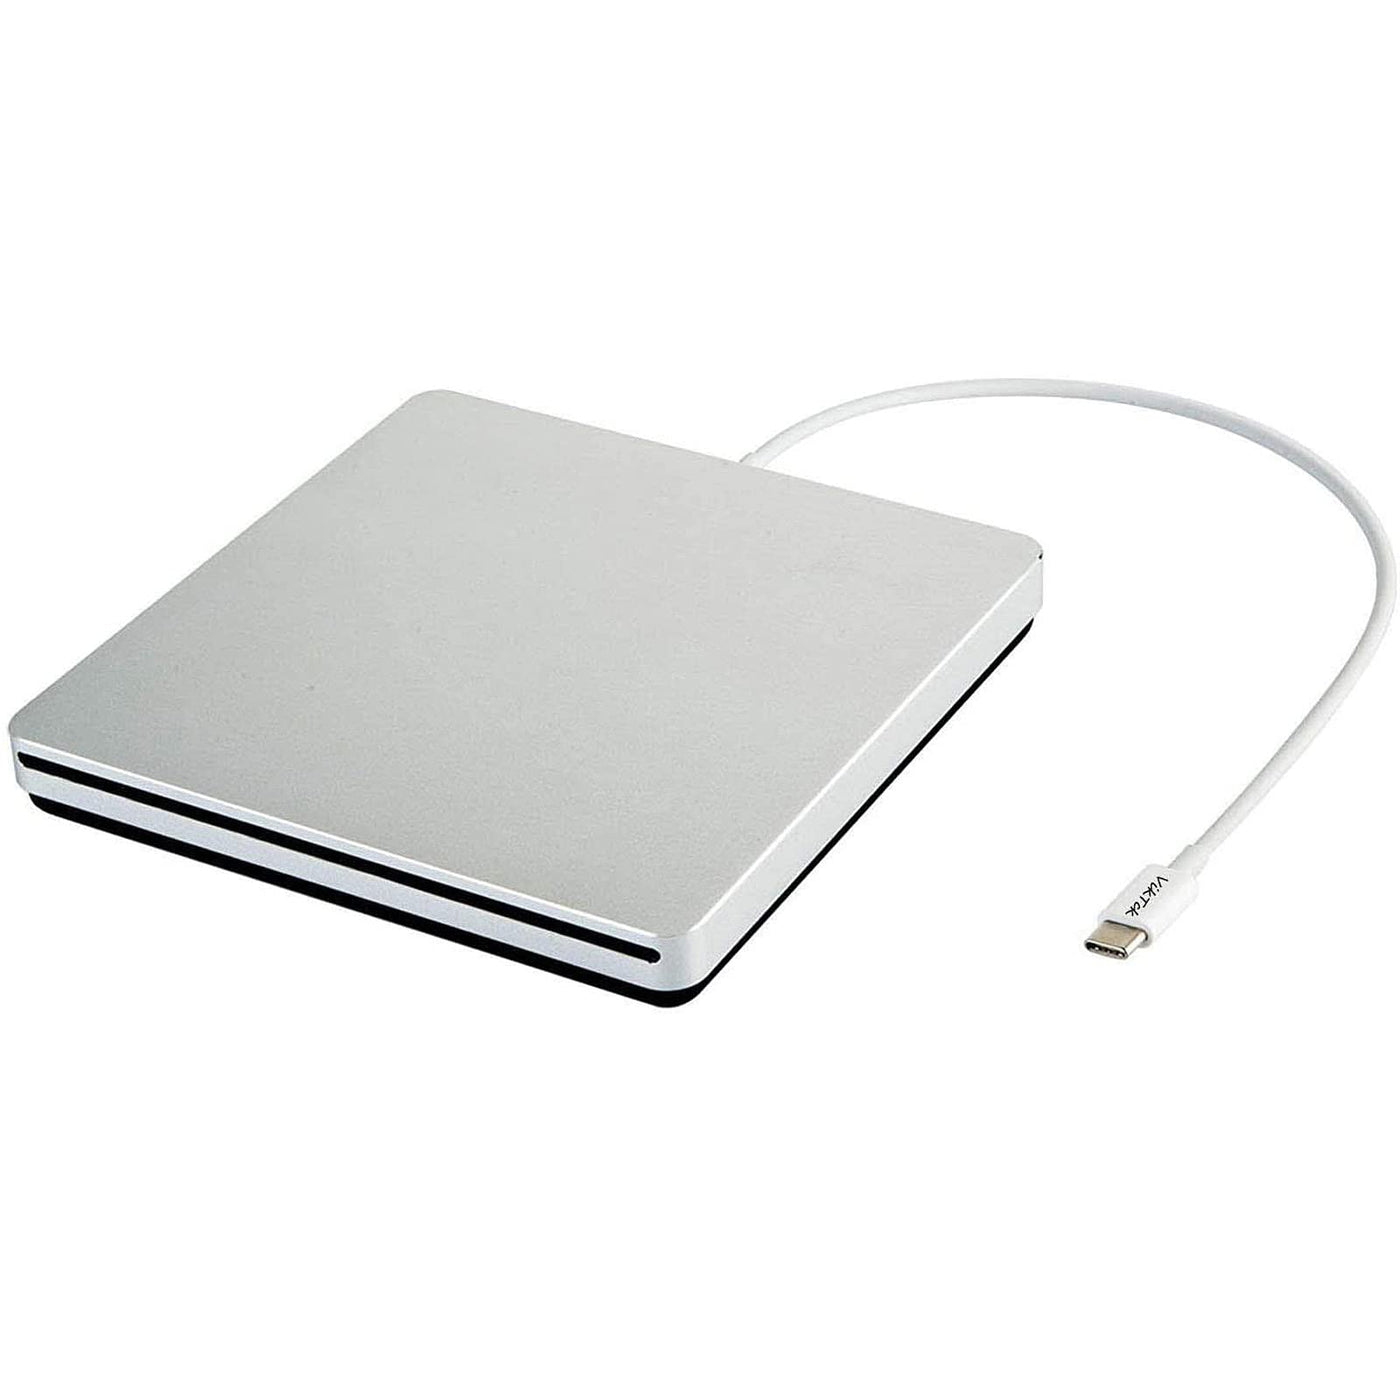 VikTck USB-C Superdrive External DVD/CD Reader and Burner, Latitude with USB-C Port Plug and Play(Silver)